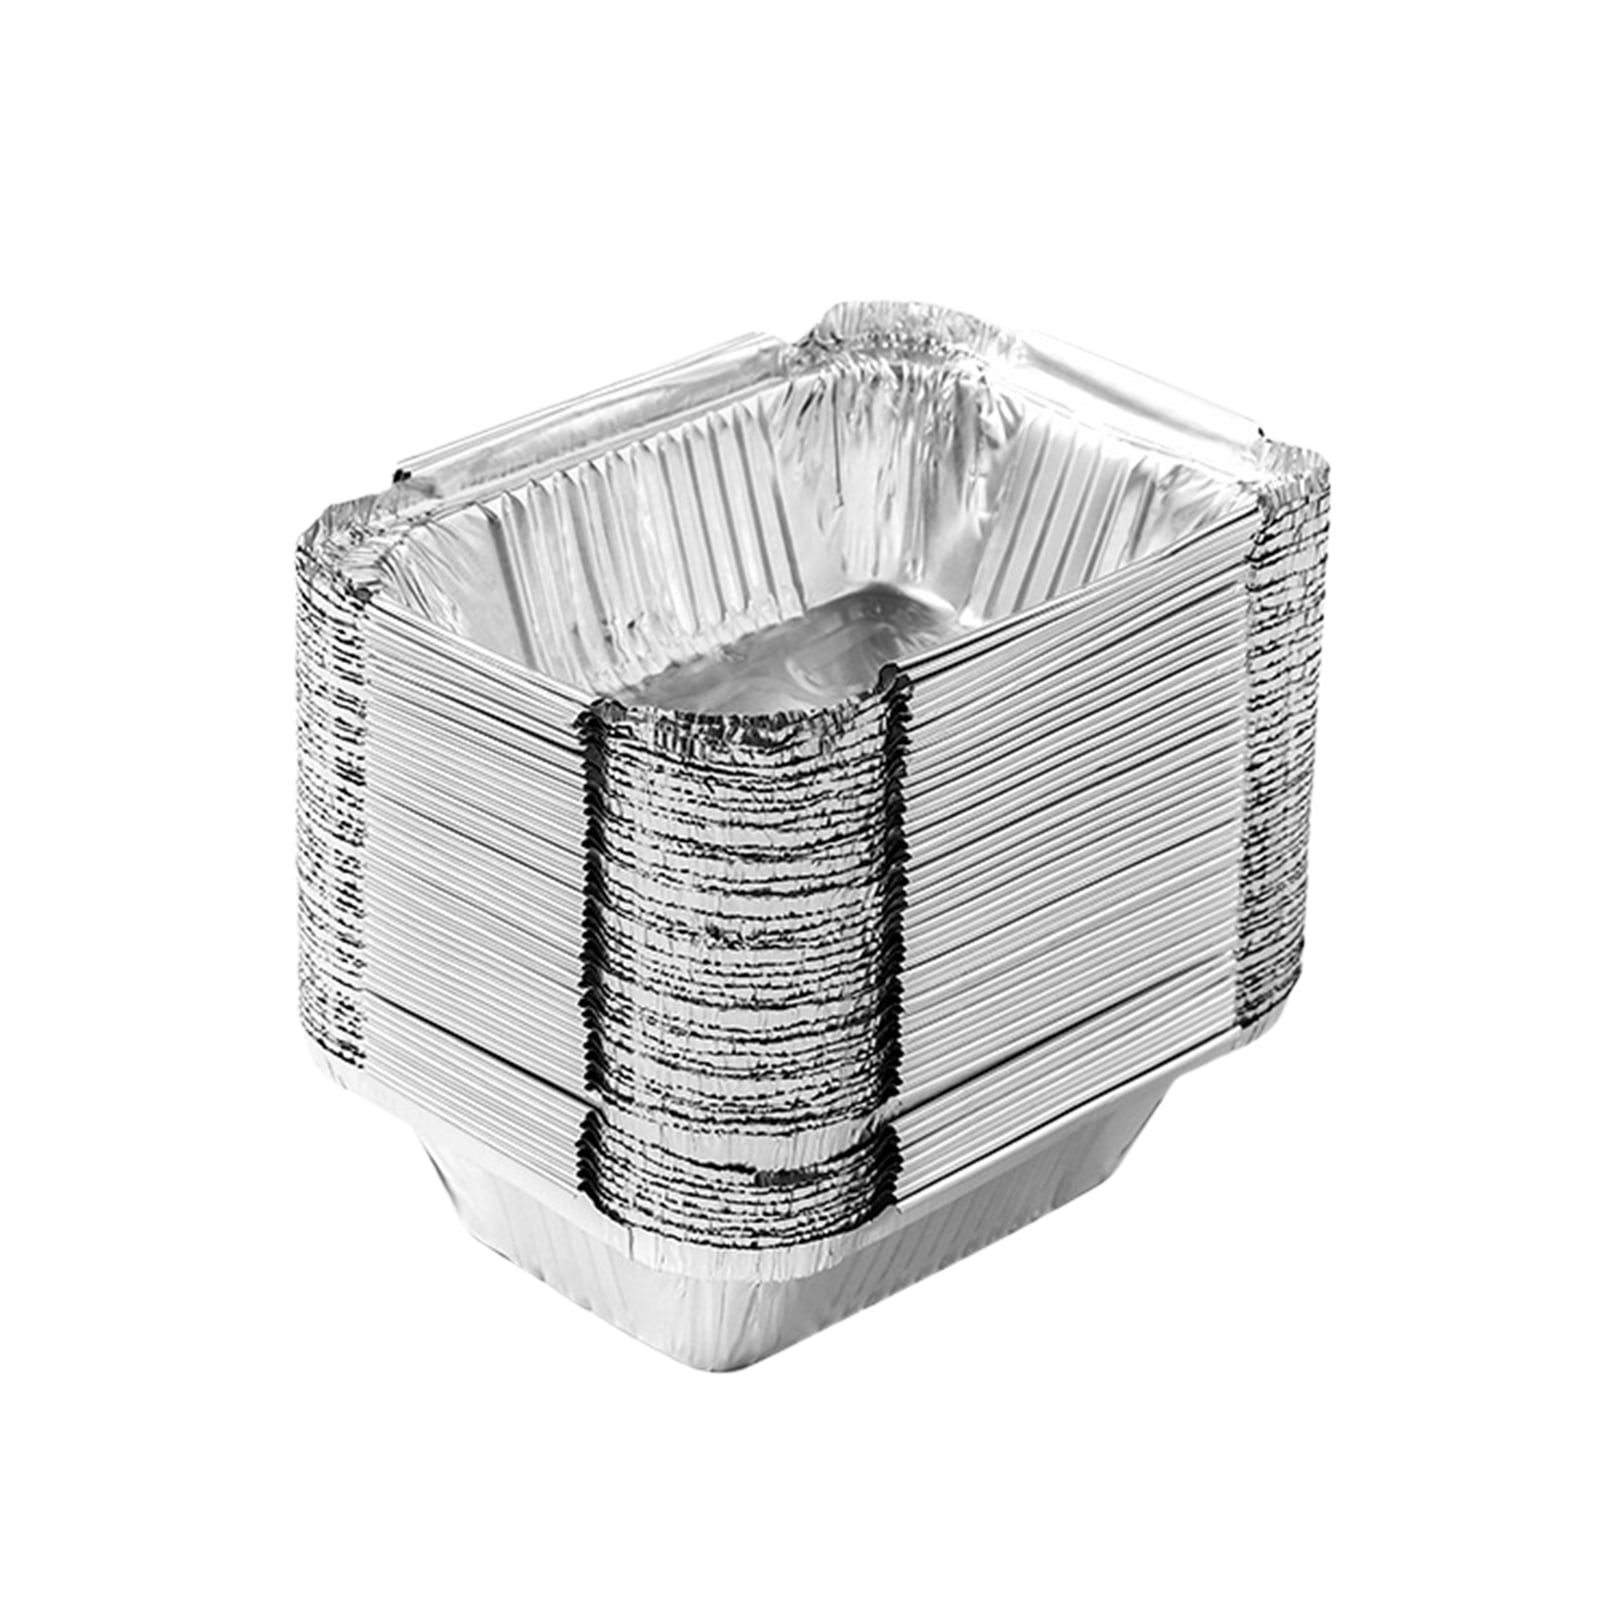 katbite 8x8 Aluminum Pans Disposable With Clear Lids for Air fryer